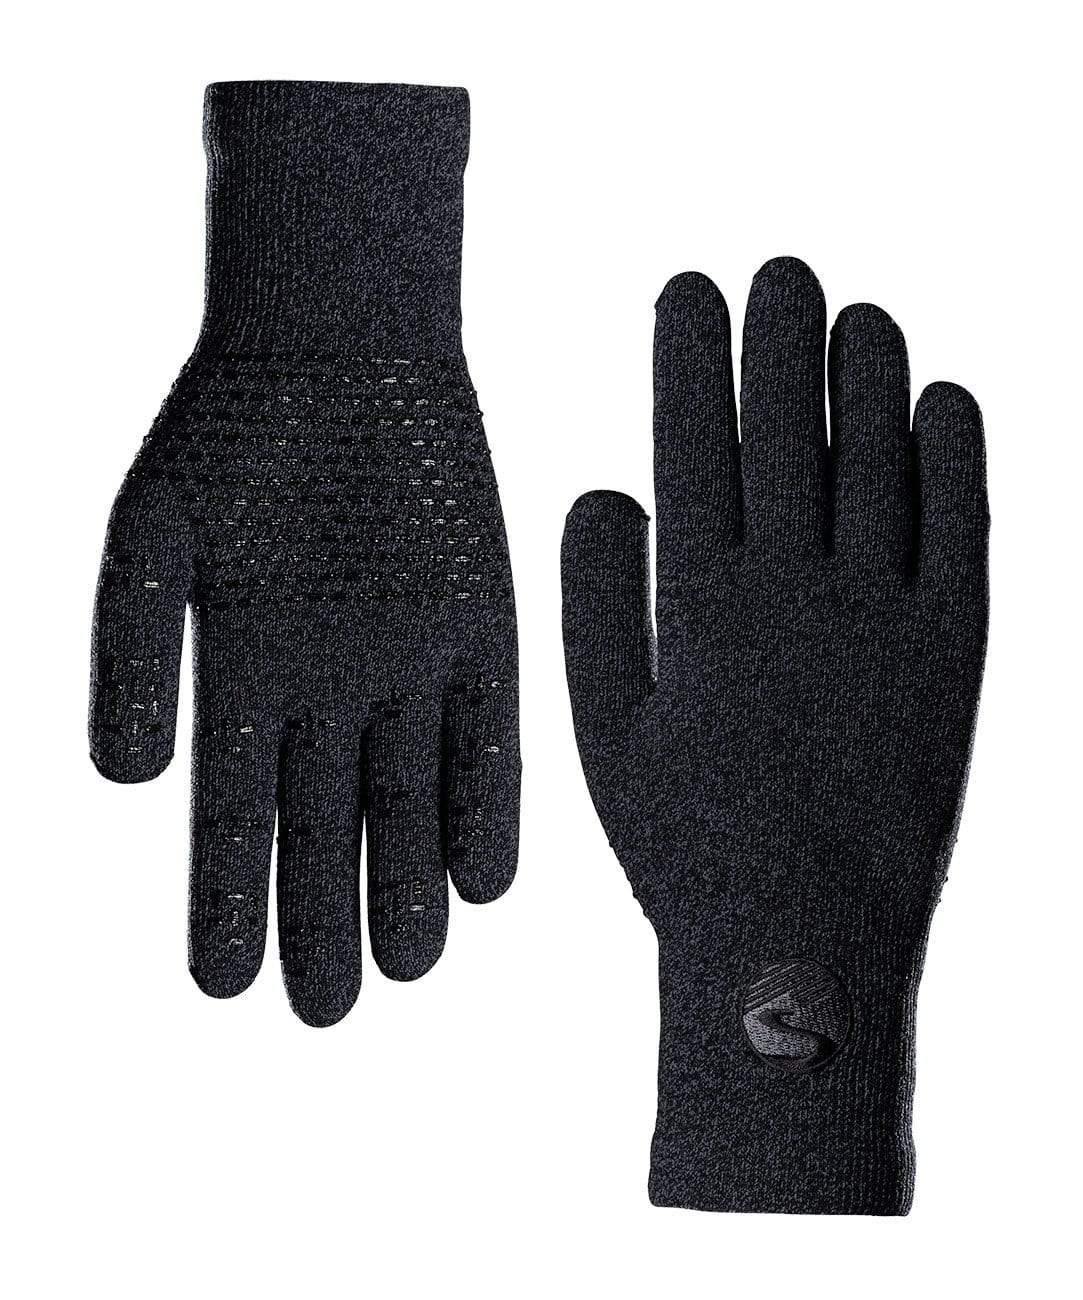 Gloves Pass Showers Crosspoint Waterproof Knit Fall |